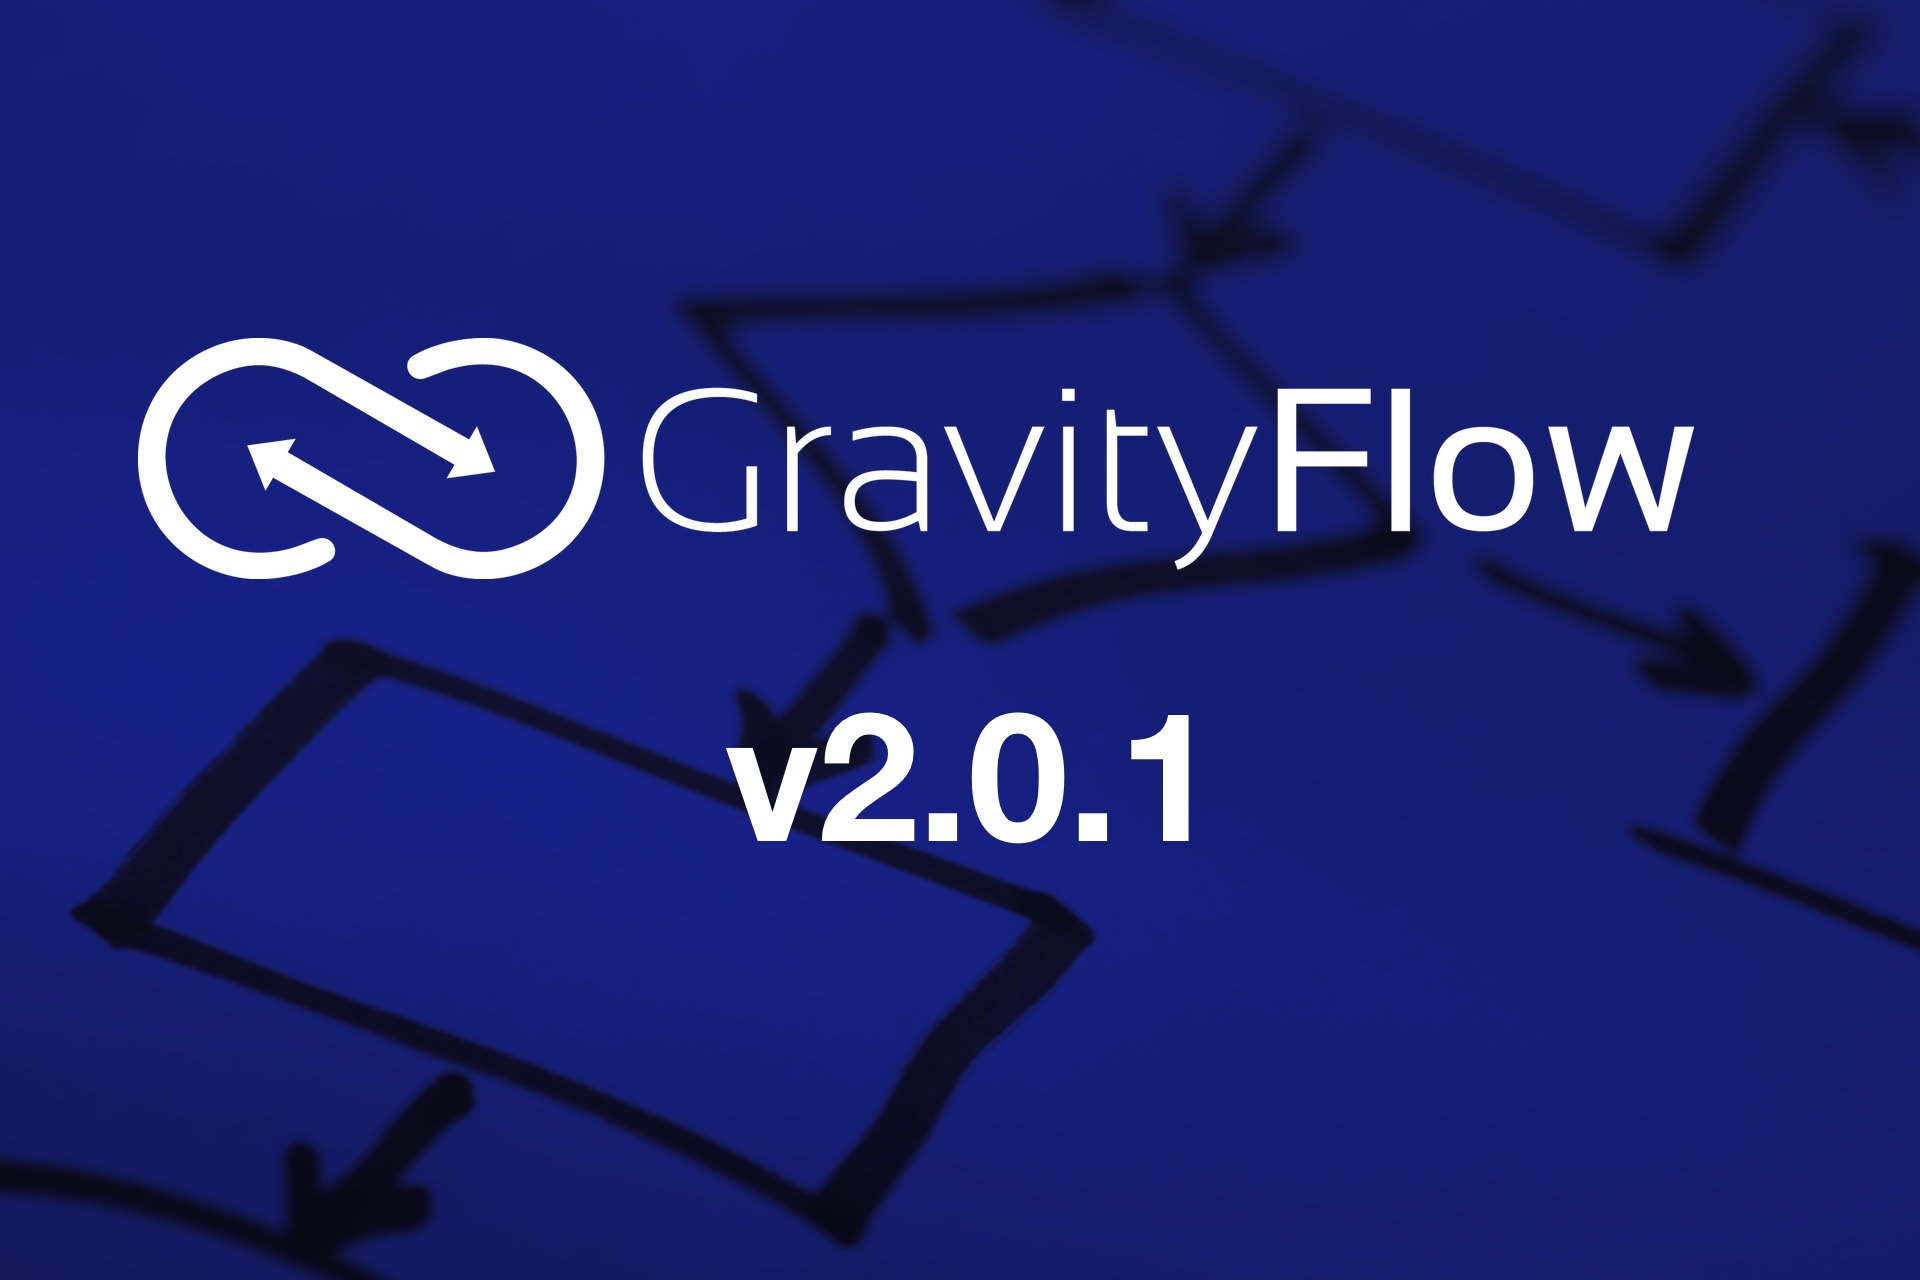 Gravity Flow 2.0.1 Released